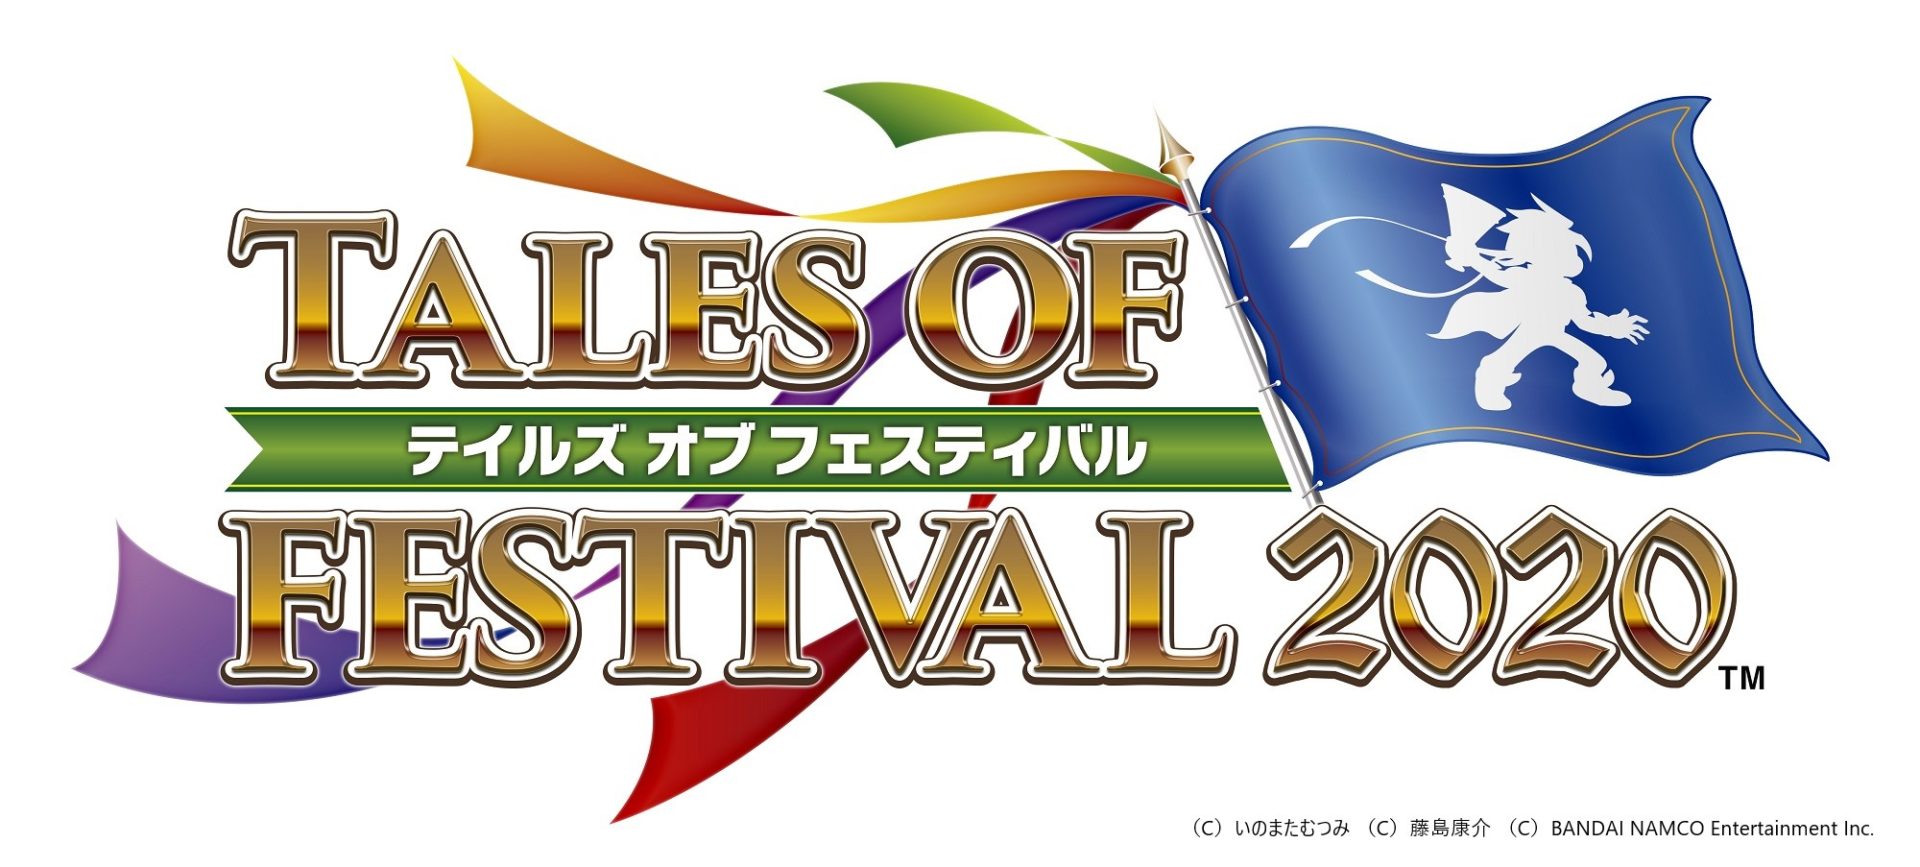 Bandai Namco เตรียมจัดงาน Tales of Festival 2020 13-14 มิ.ย. นี้